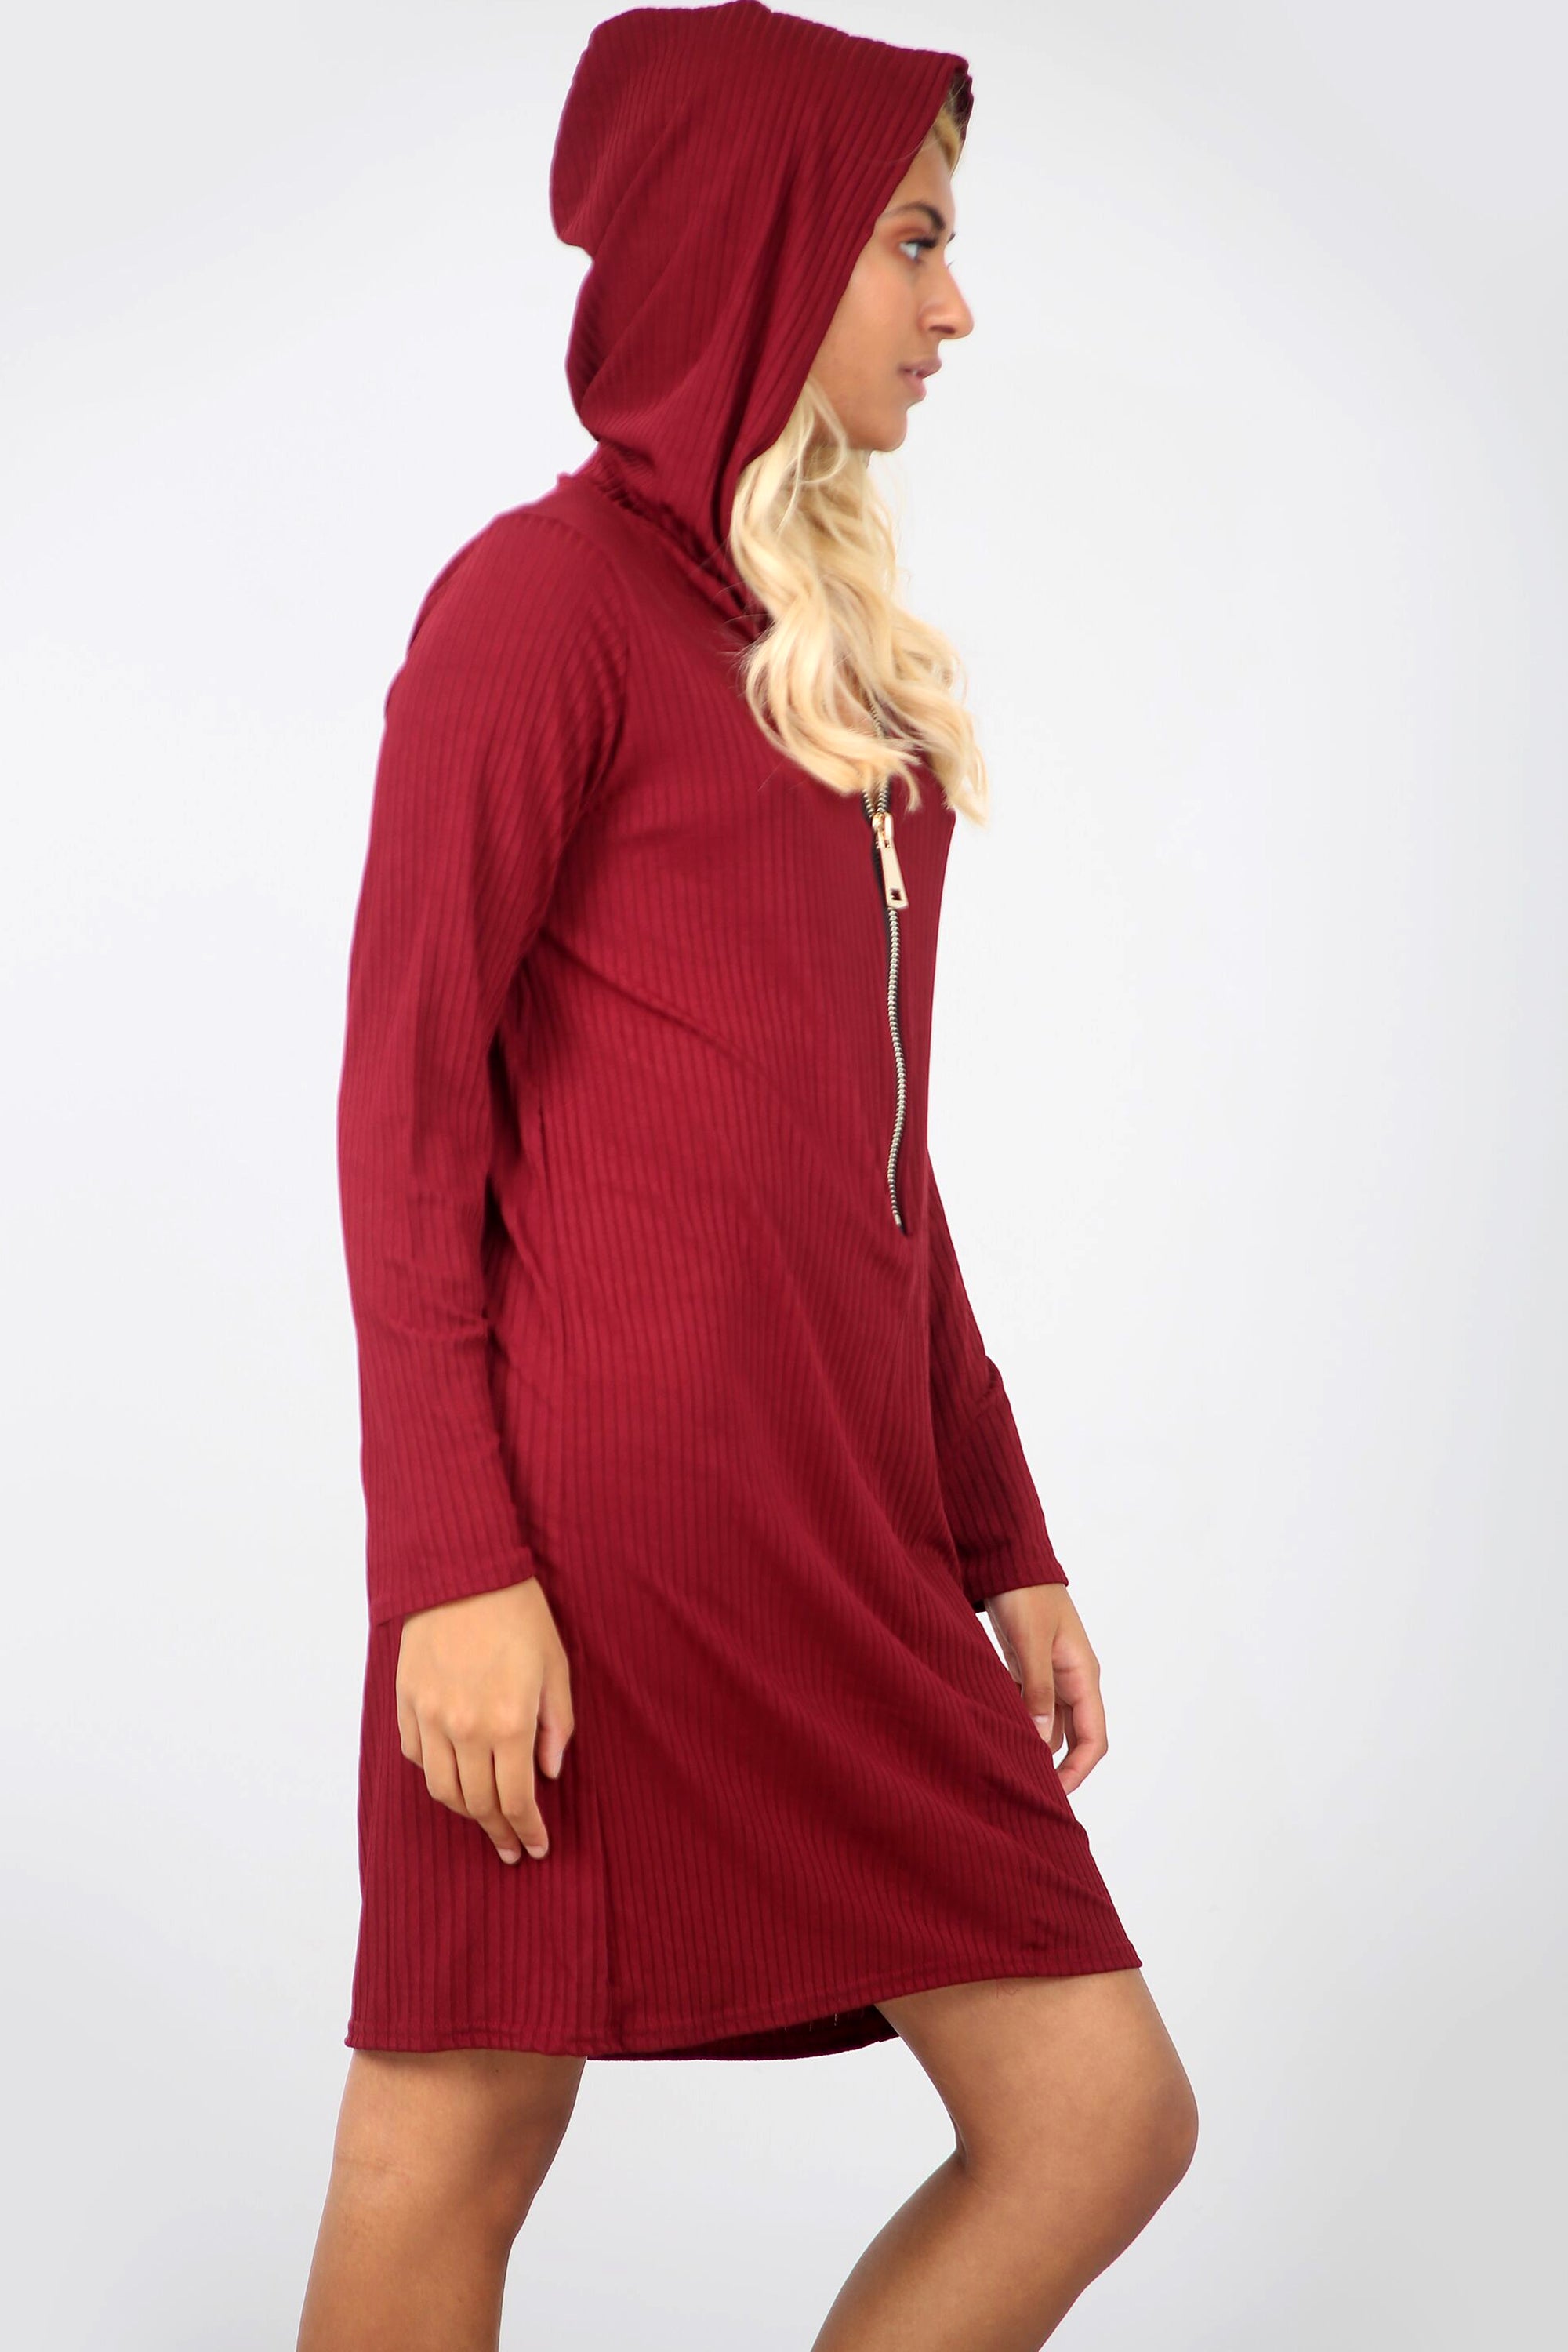 Long Sleeve Plunge Neck Black Ribbed Sweater Dress - bejealous-com